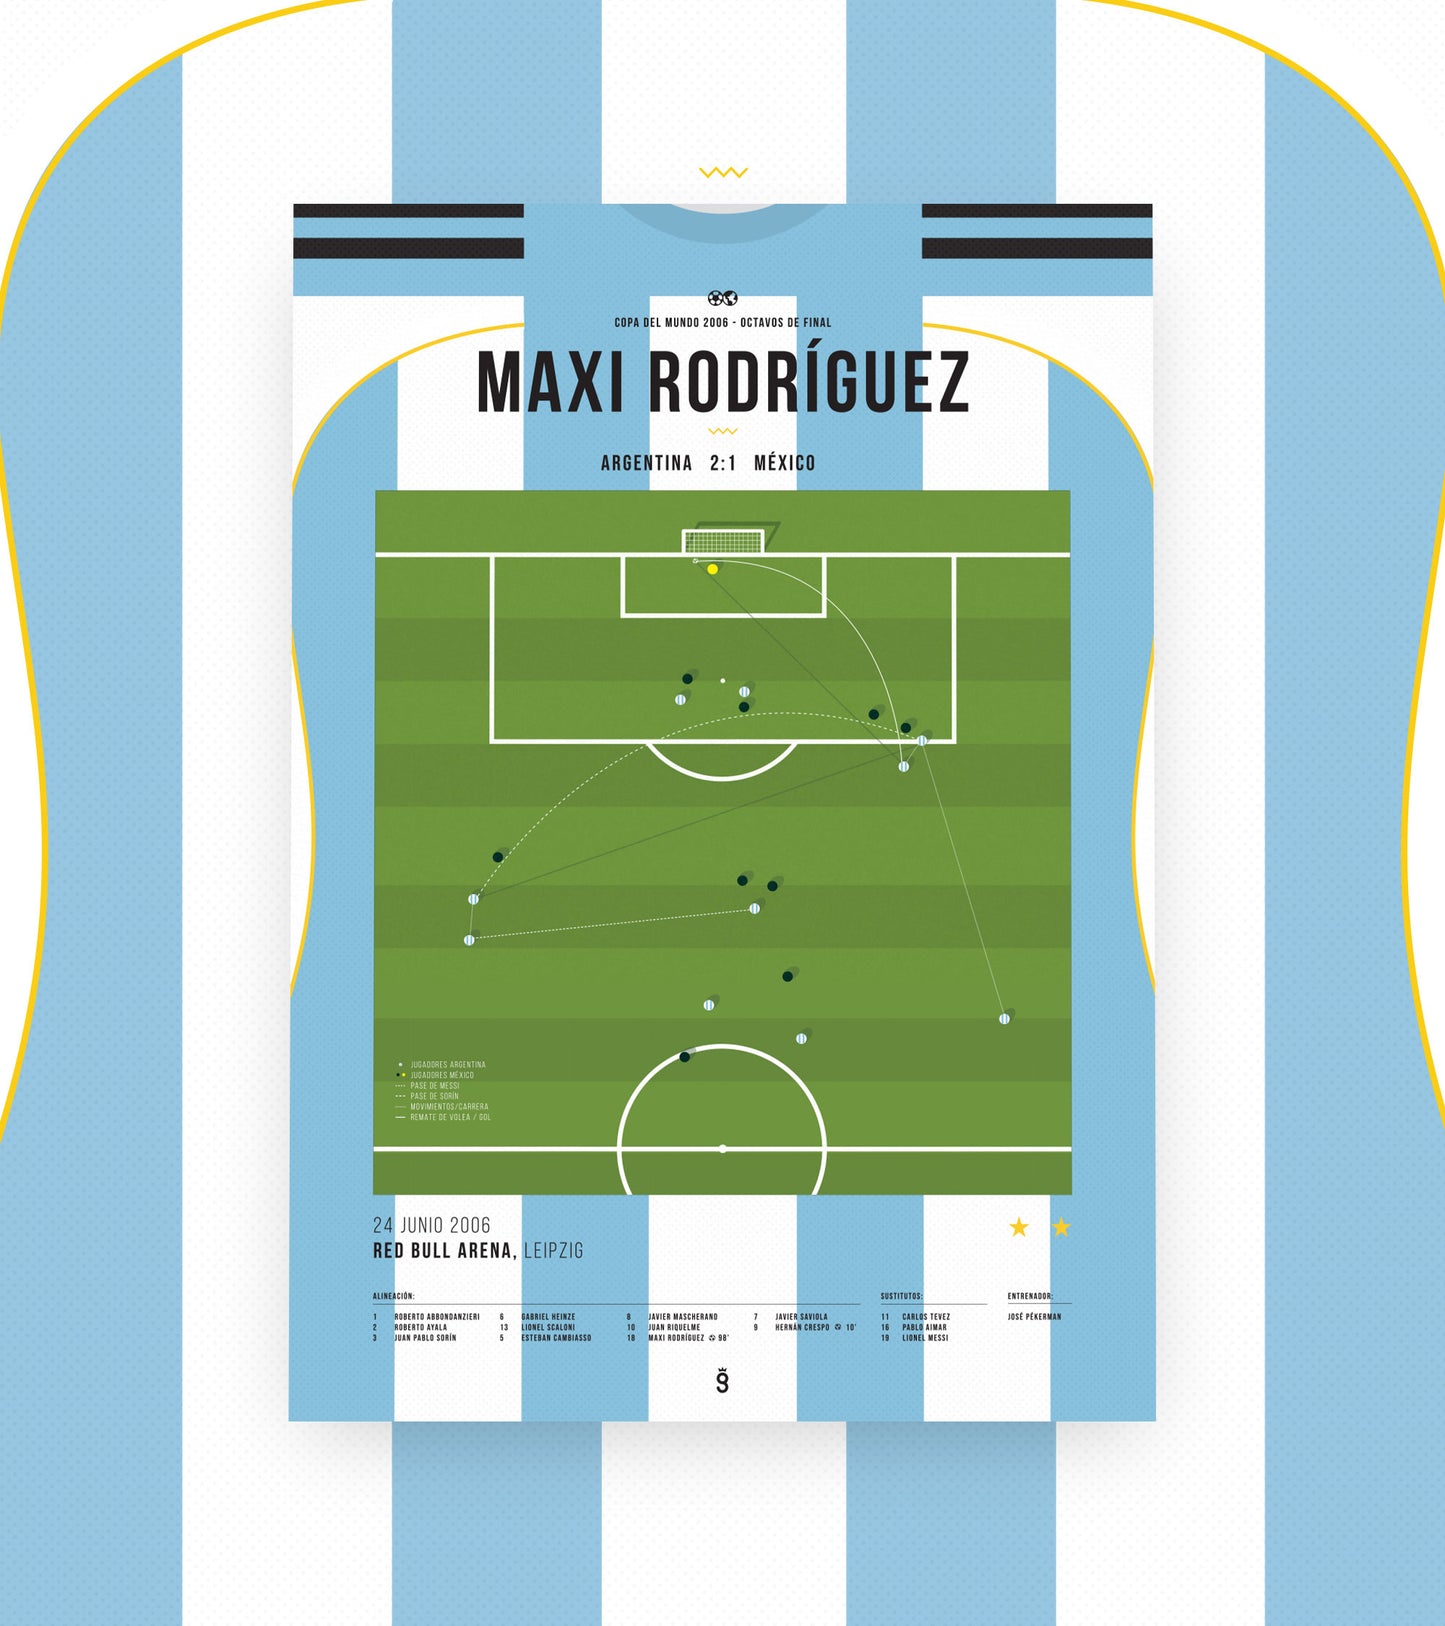 Maxi Rodriguez wonder goal